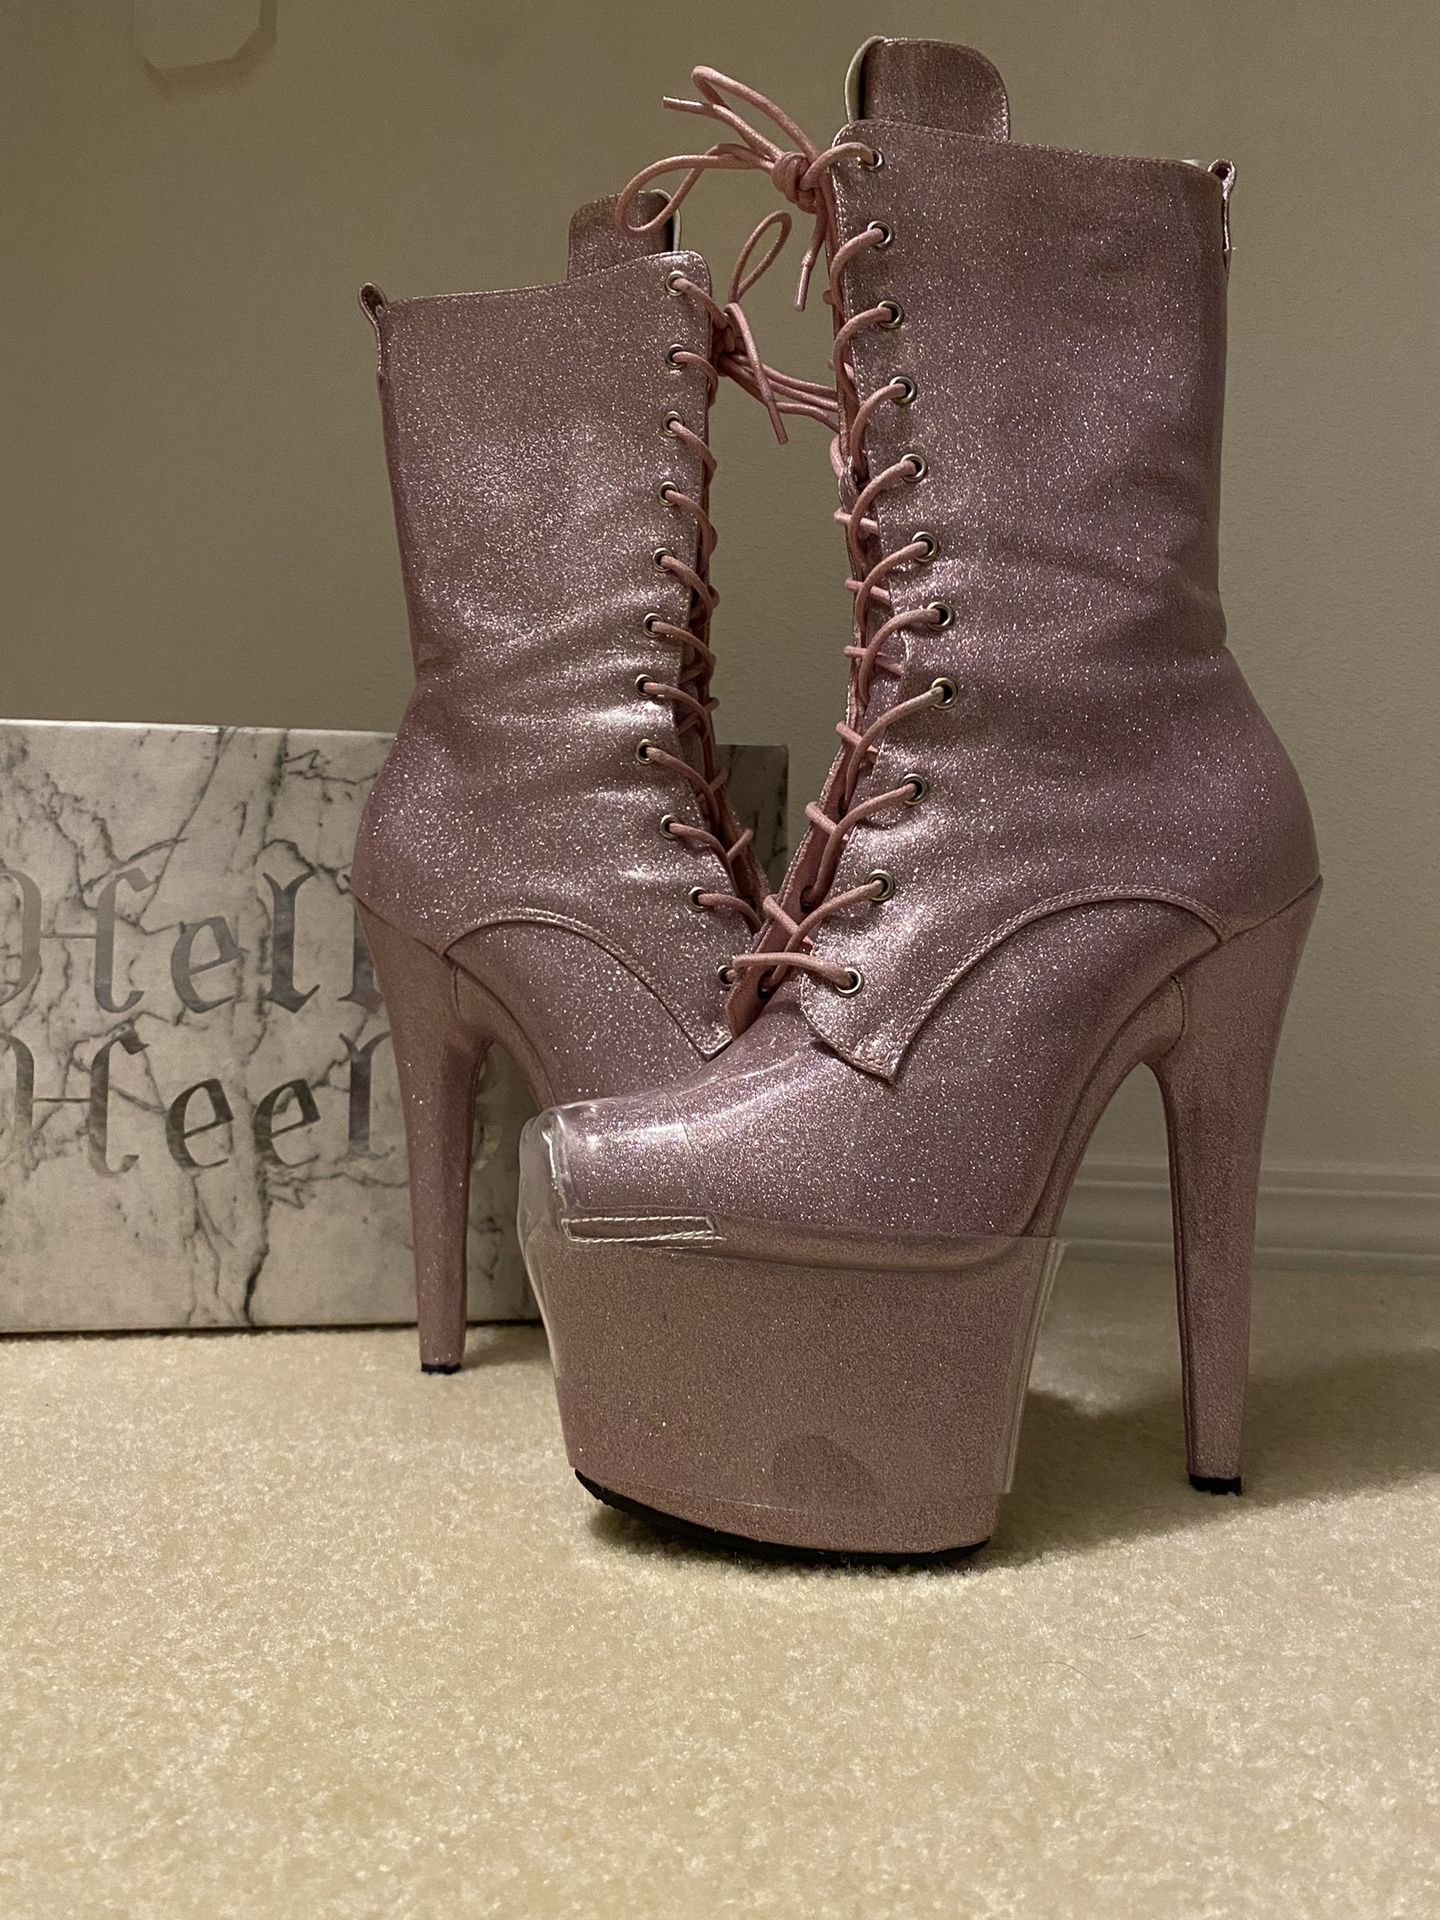 Hella Heels Glitterati Boot - Sugarbaby - 7 INCH; Size 10 